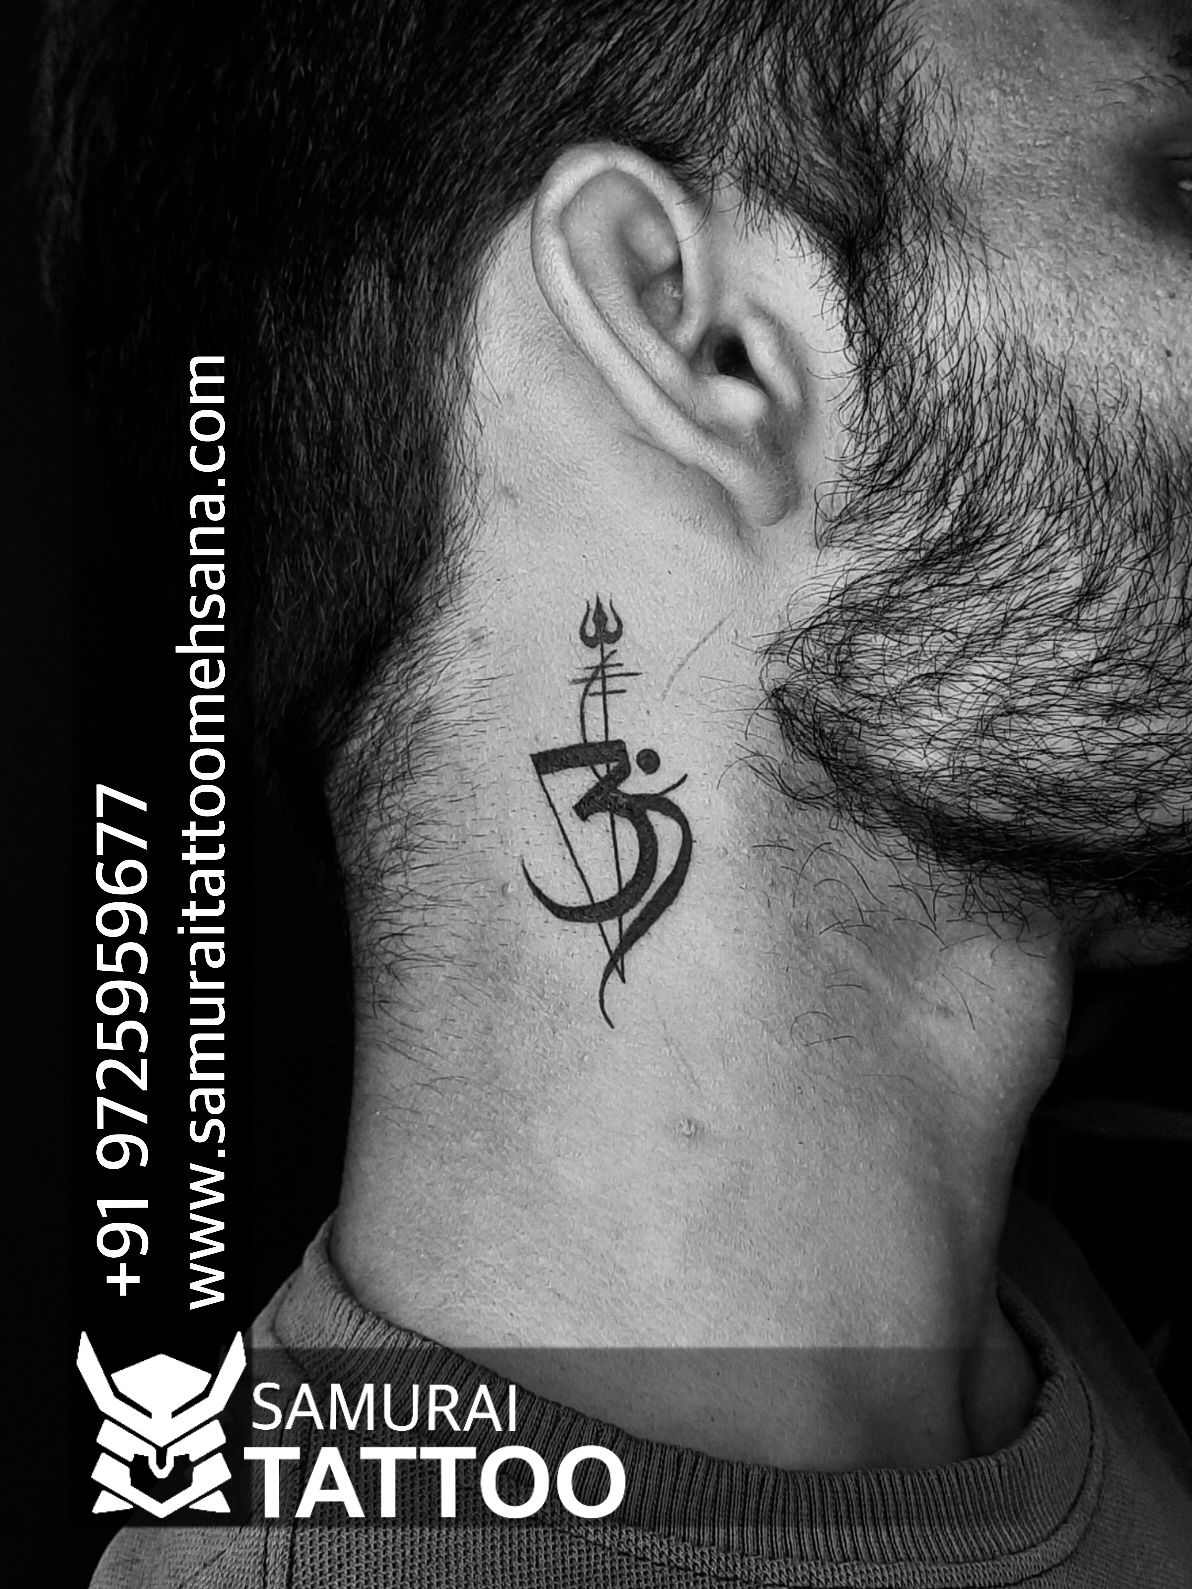 Trishul tattoo #necktattoo #shivbhakt... - The Tattoo Studio. | Facebook